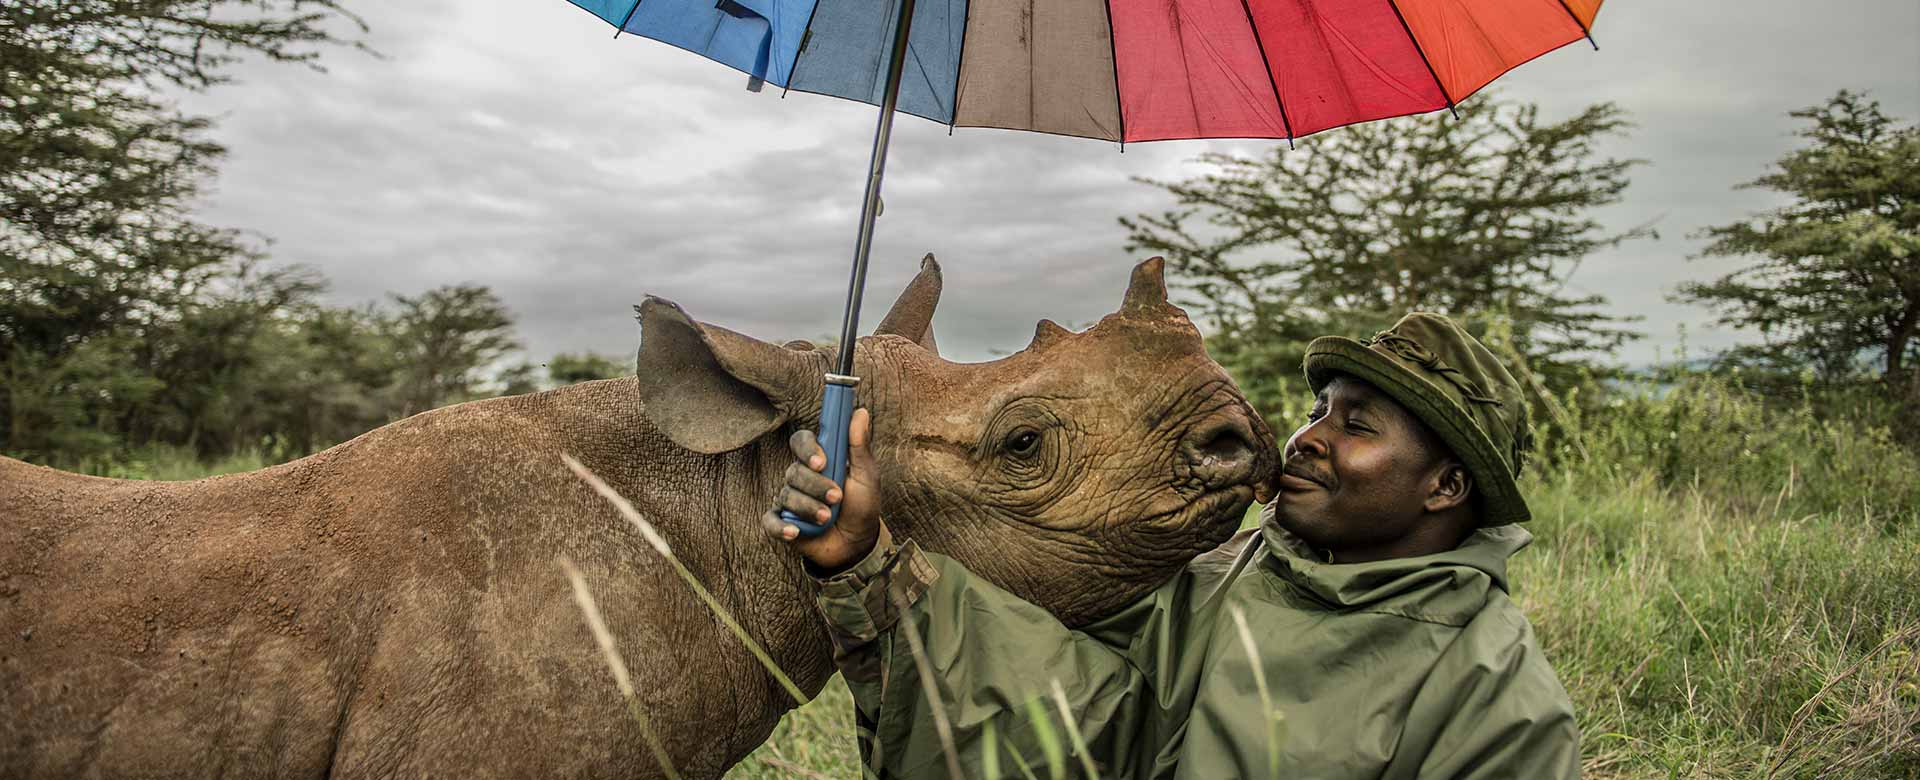 Il rinoceronte Kilifi, in Kenya, fotografato da Ami Vitale